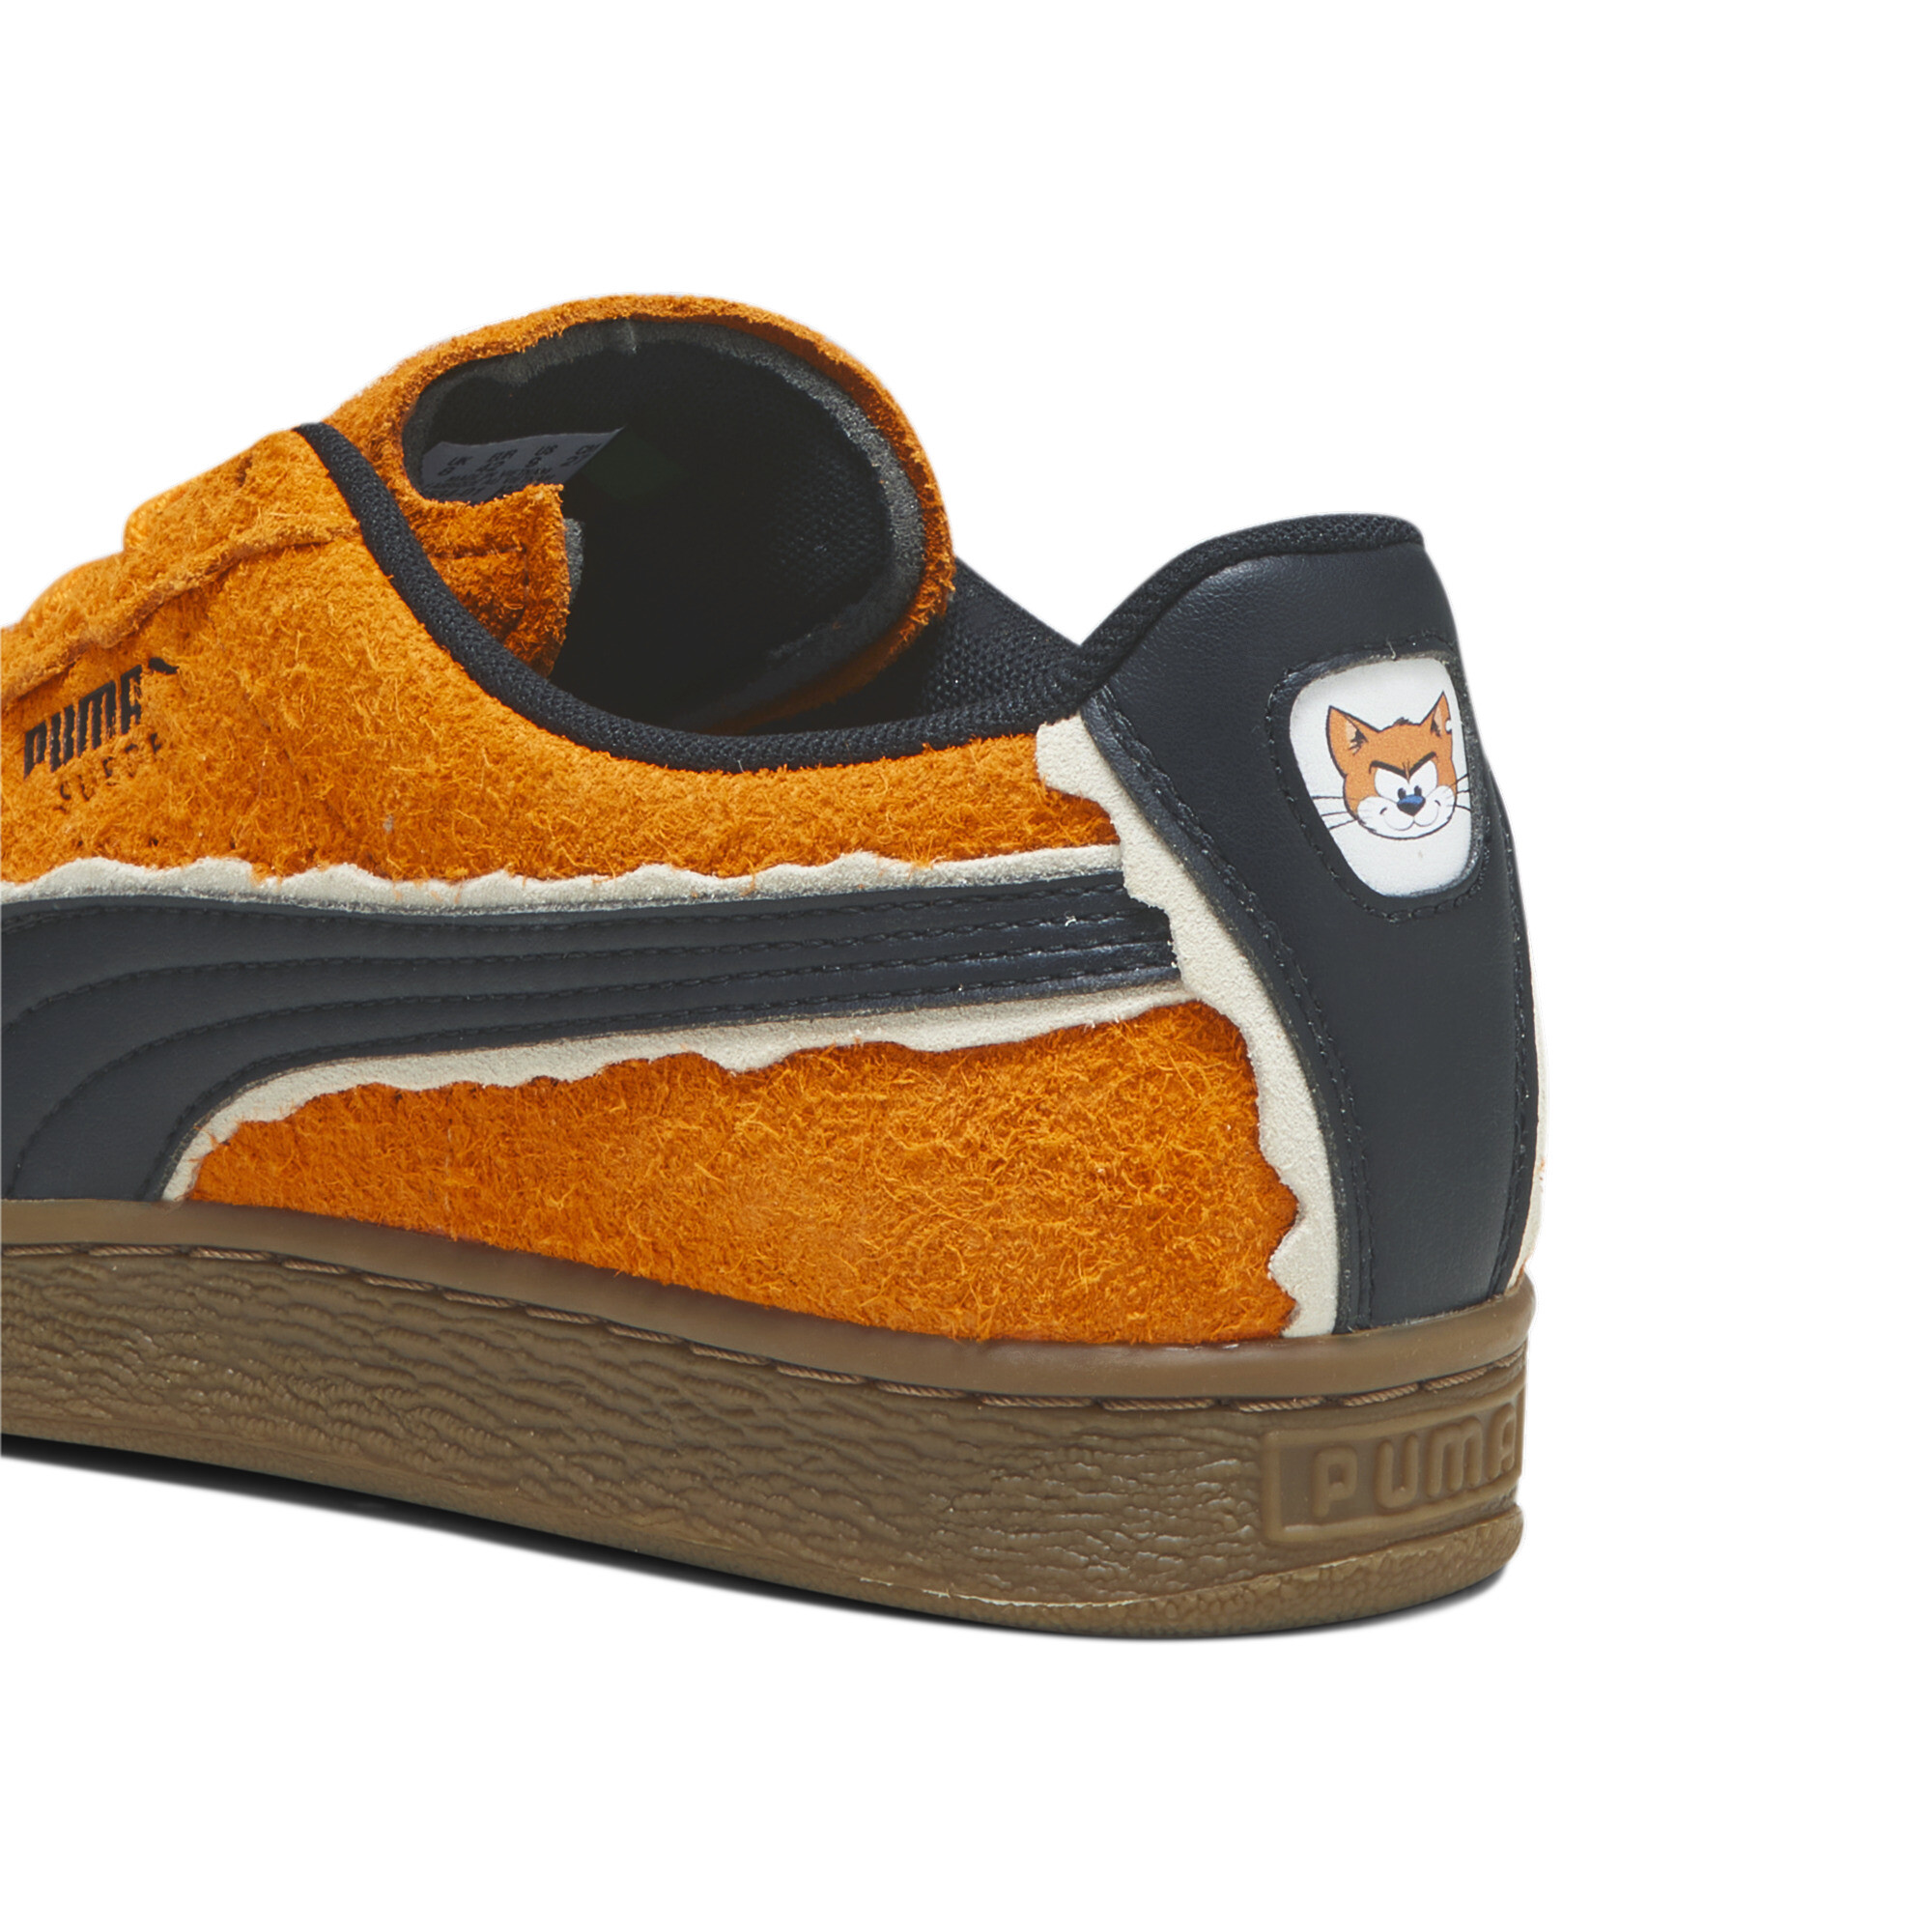 Men's PUMA X THE SMURFS Suede Sneakers In Orange, Size EU 41